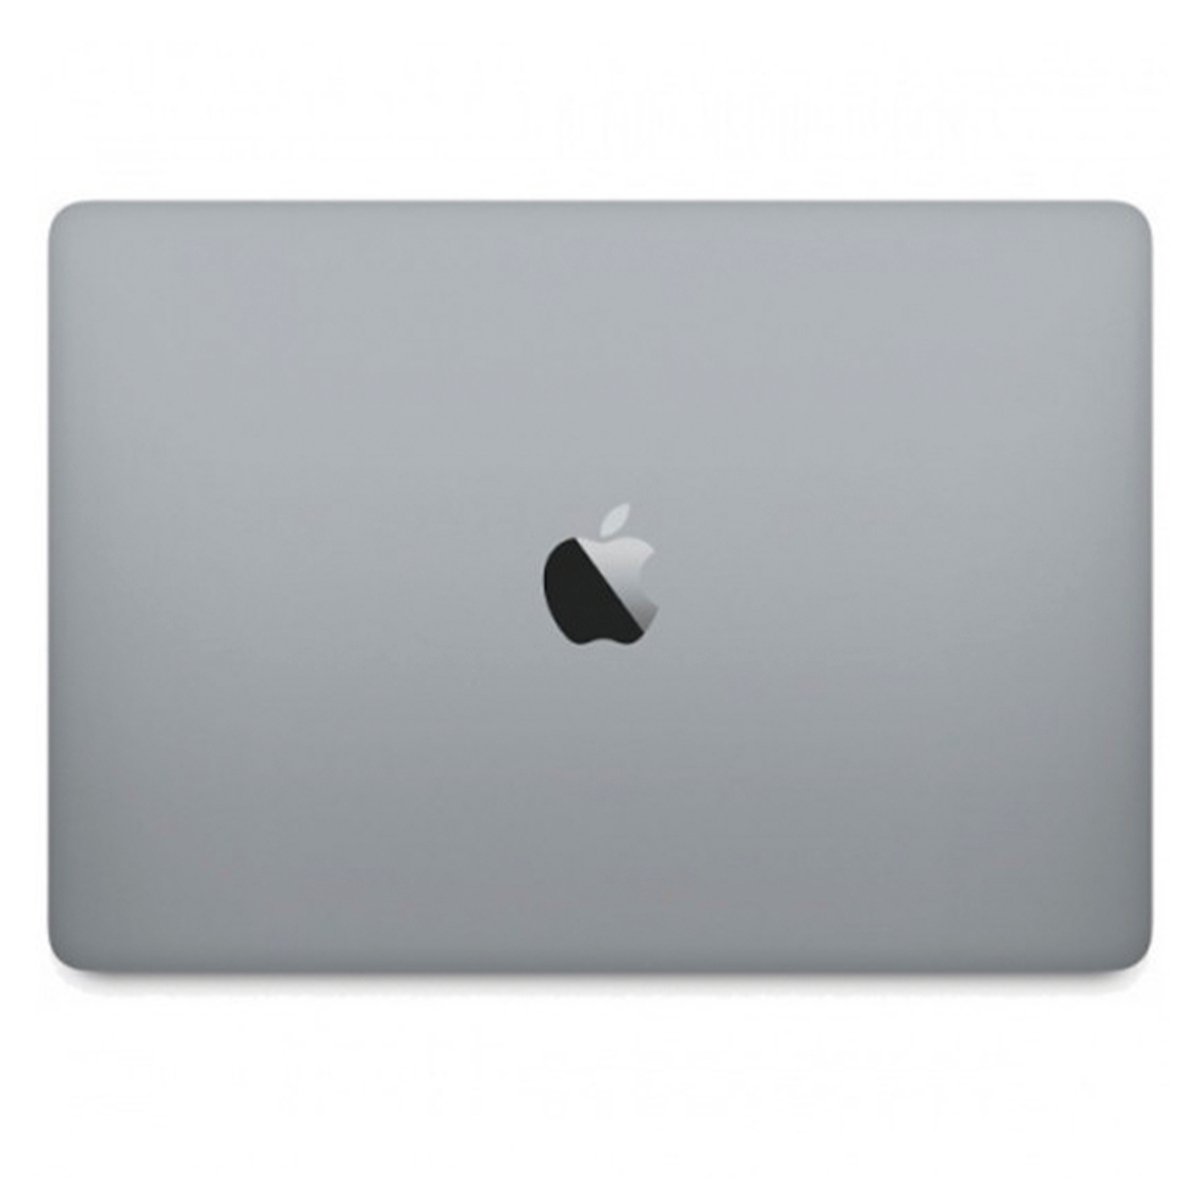 Apple MacBook Pro MYD92B/A,Apple M1 chip with 8-core GPU, 512GB SSD,8GB RAM,13.3"IPS Display,Space Grey